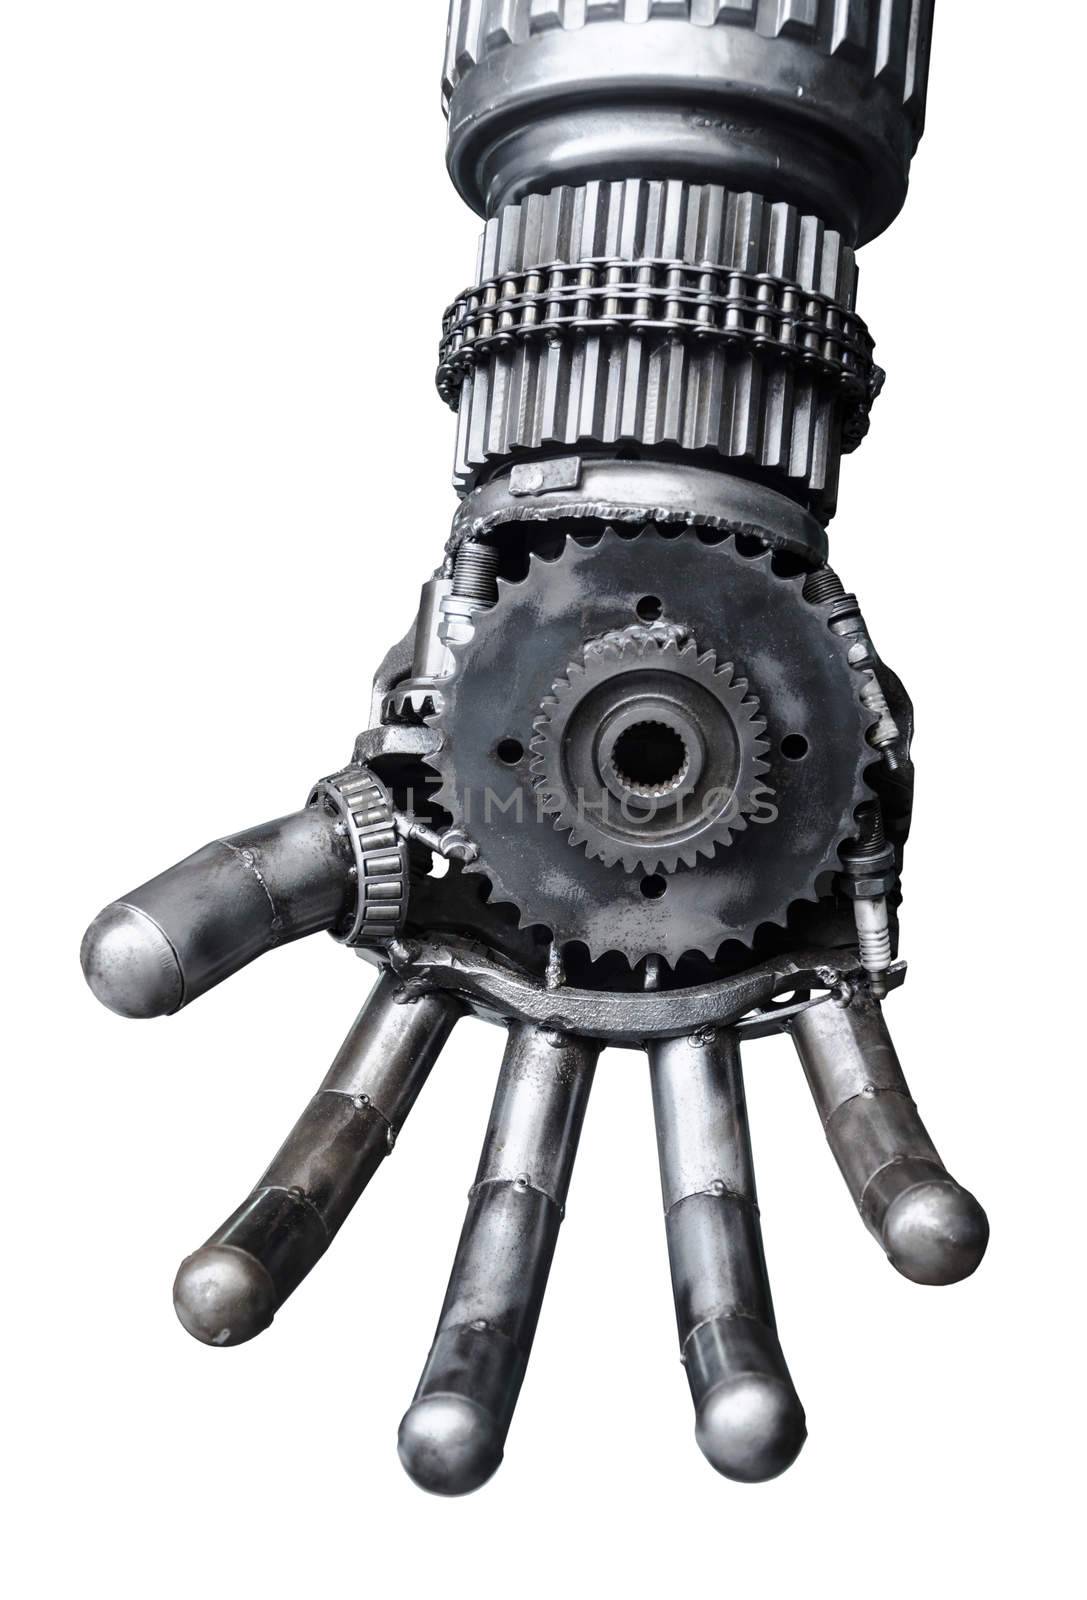 Hand of Metallic cy-ber or robot. by Gamjai